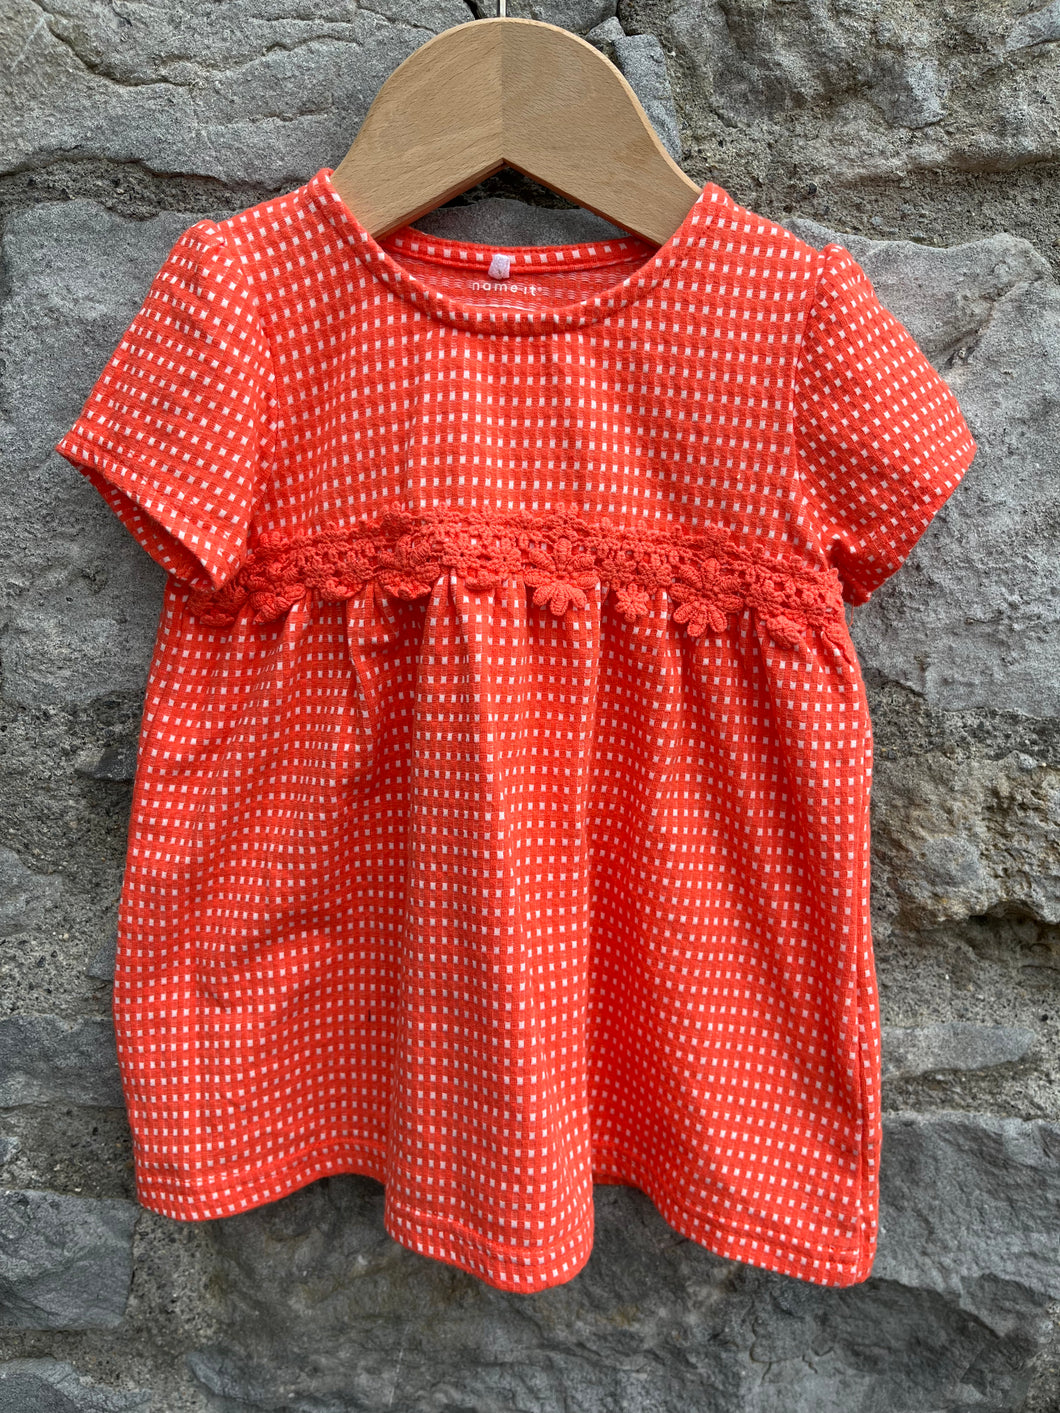 Orange spotty dress  9-12m (74-80cm)